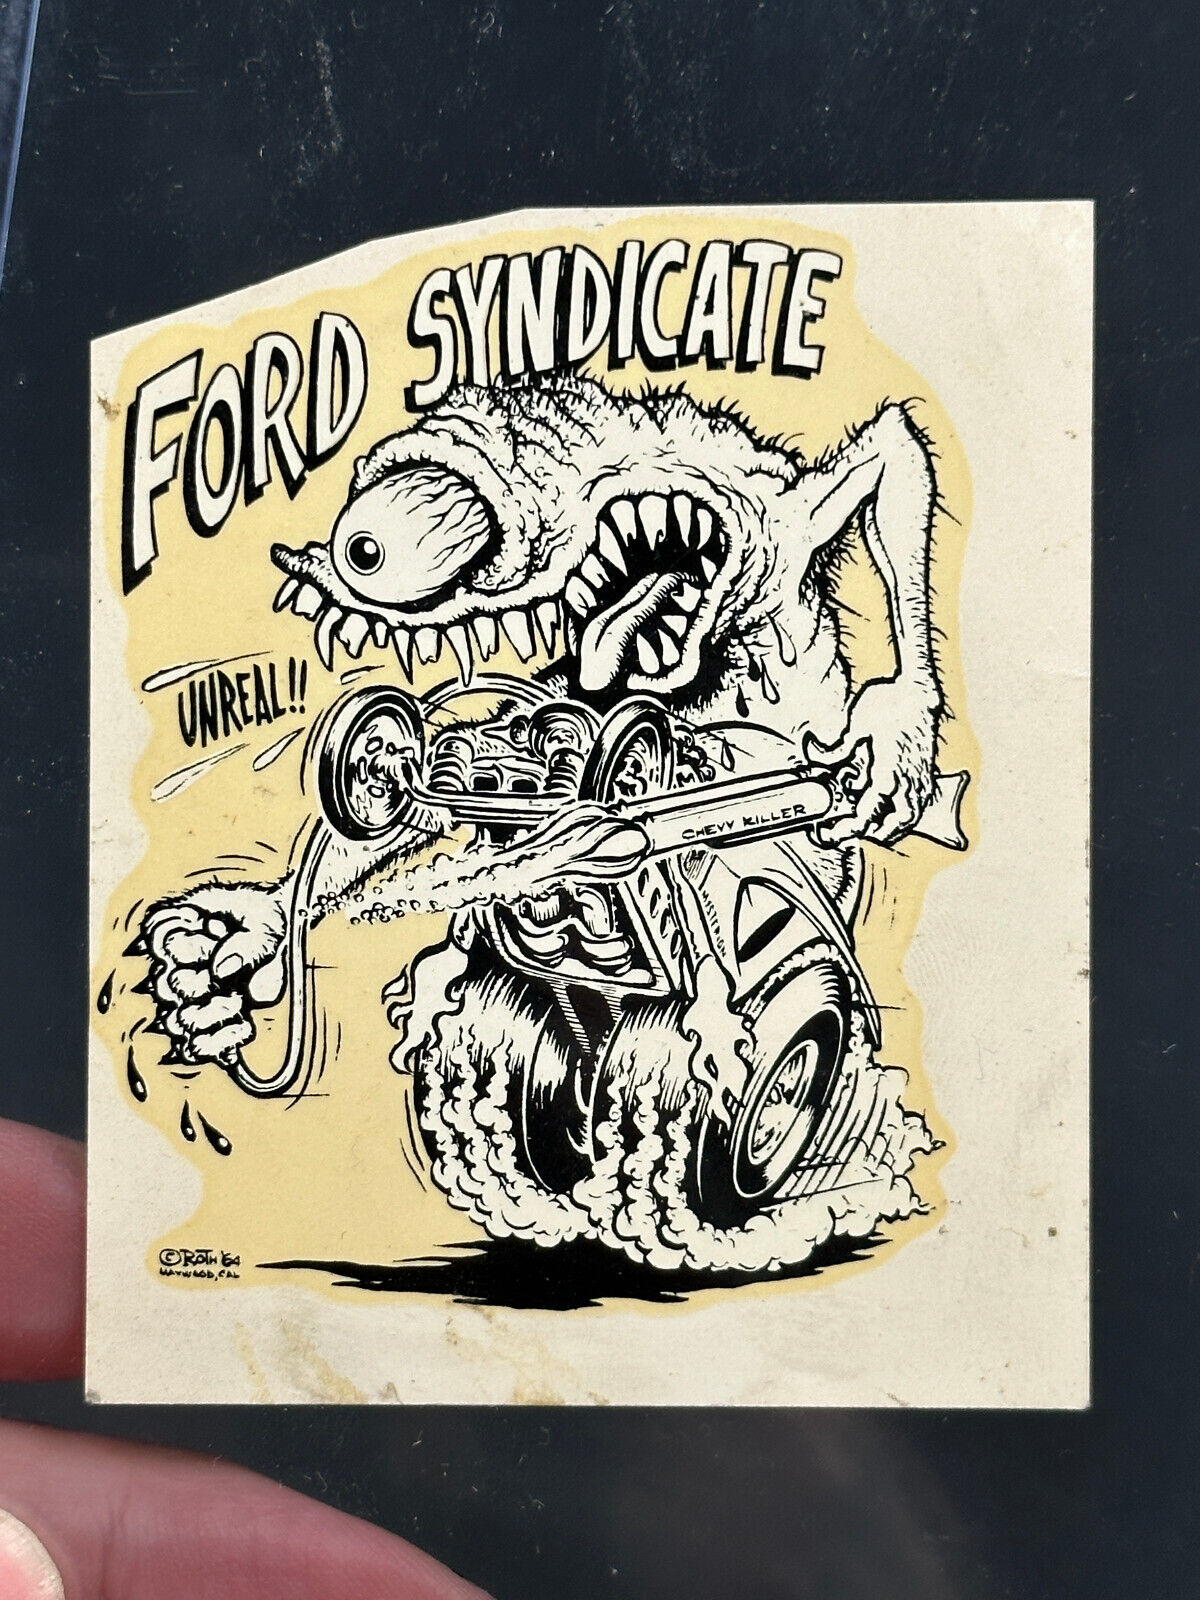 Original vtg 1964 Ed Big Daddy Roth Ford Syndicate rat fink sticker decal